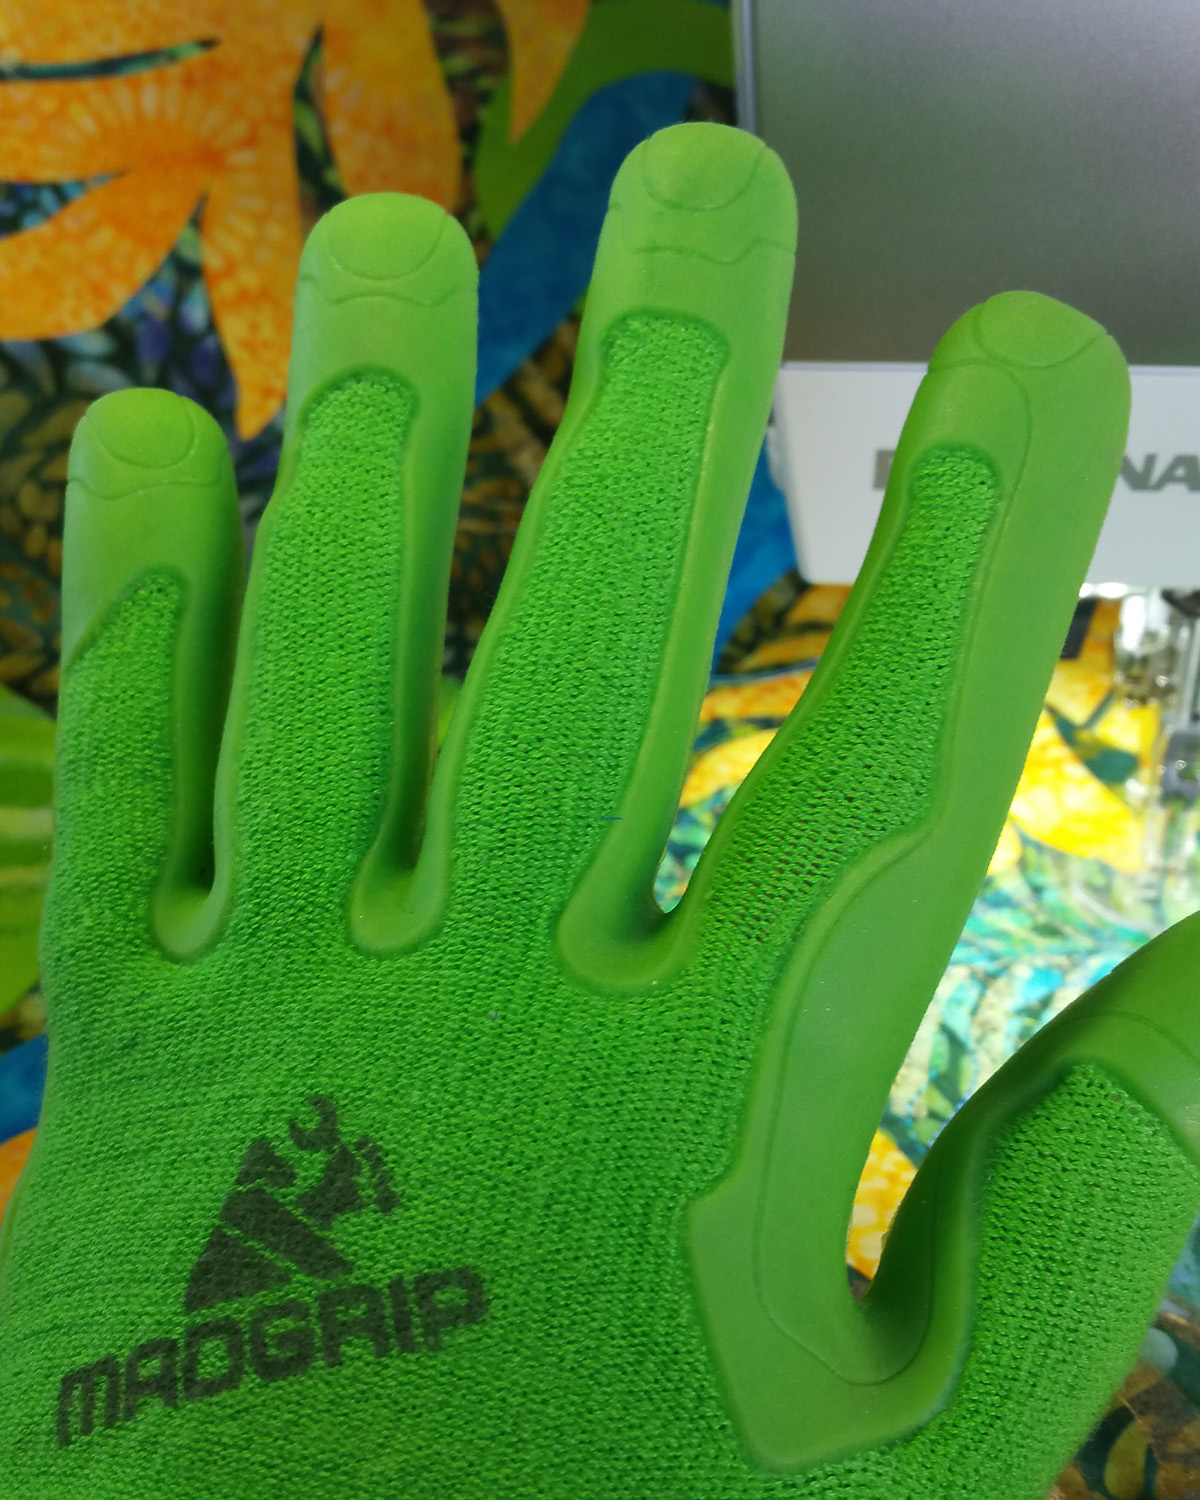 Madgrip glove